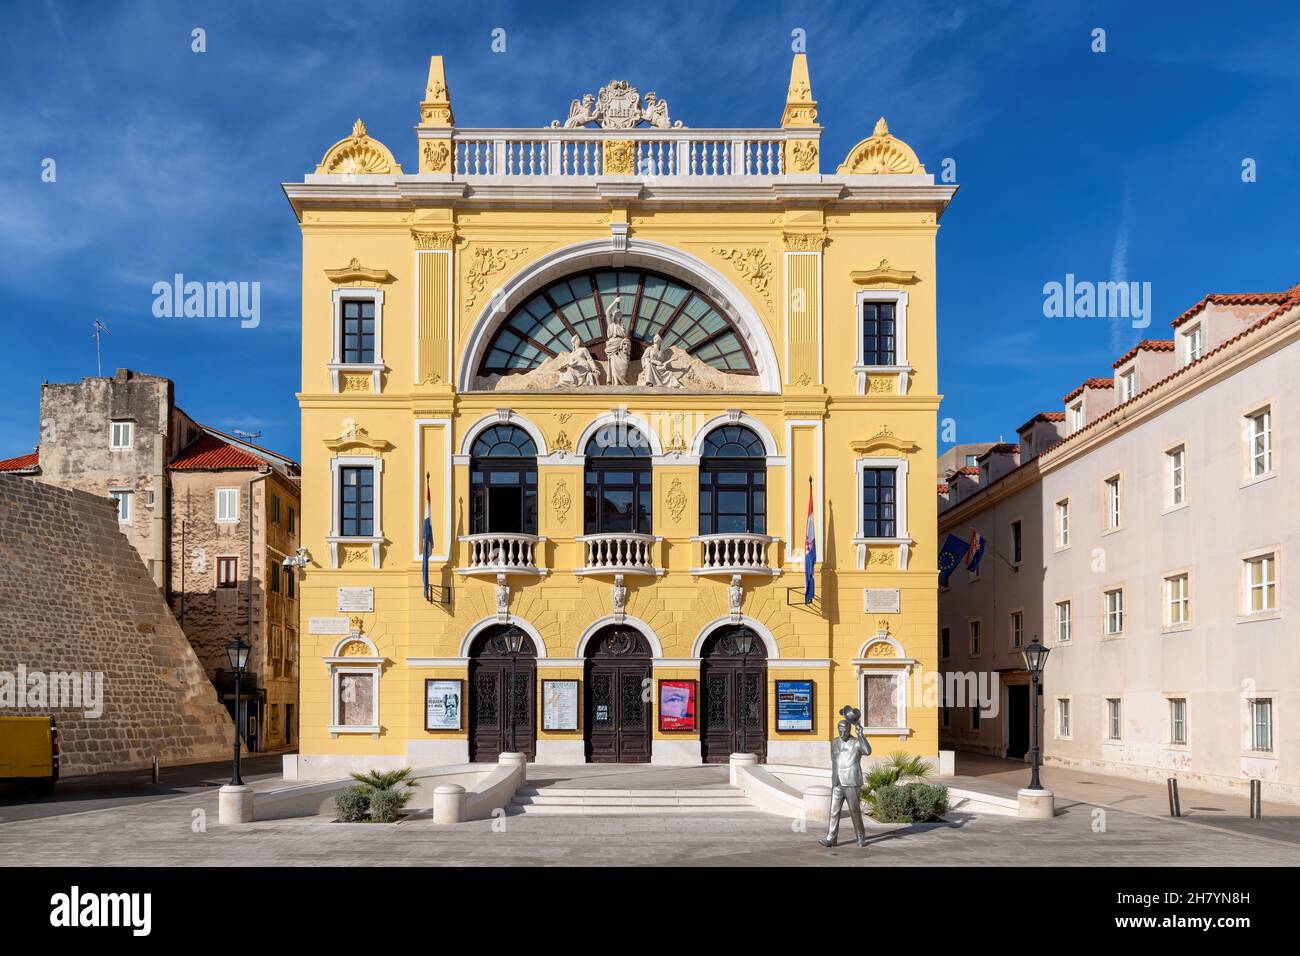 Croatian National Theatre of Split in sunny day, Dalmatia region of Croatia Stock Photo